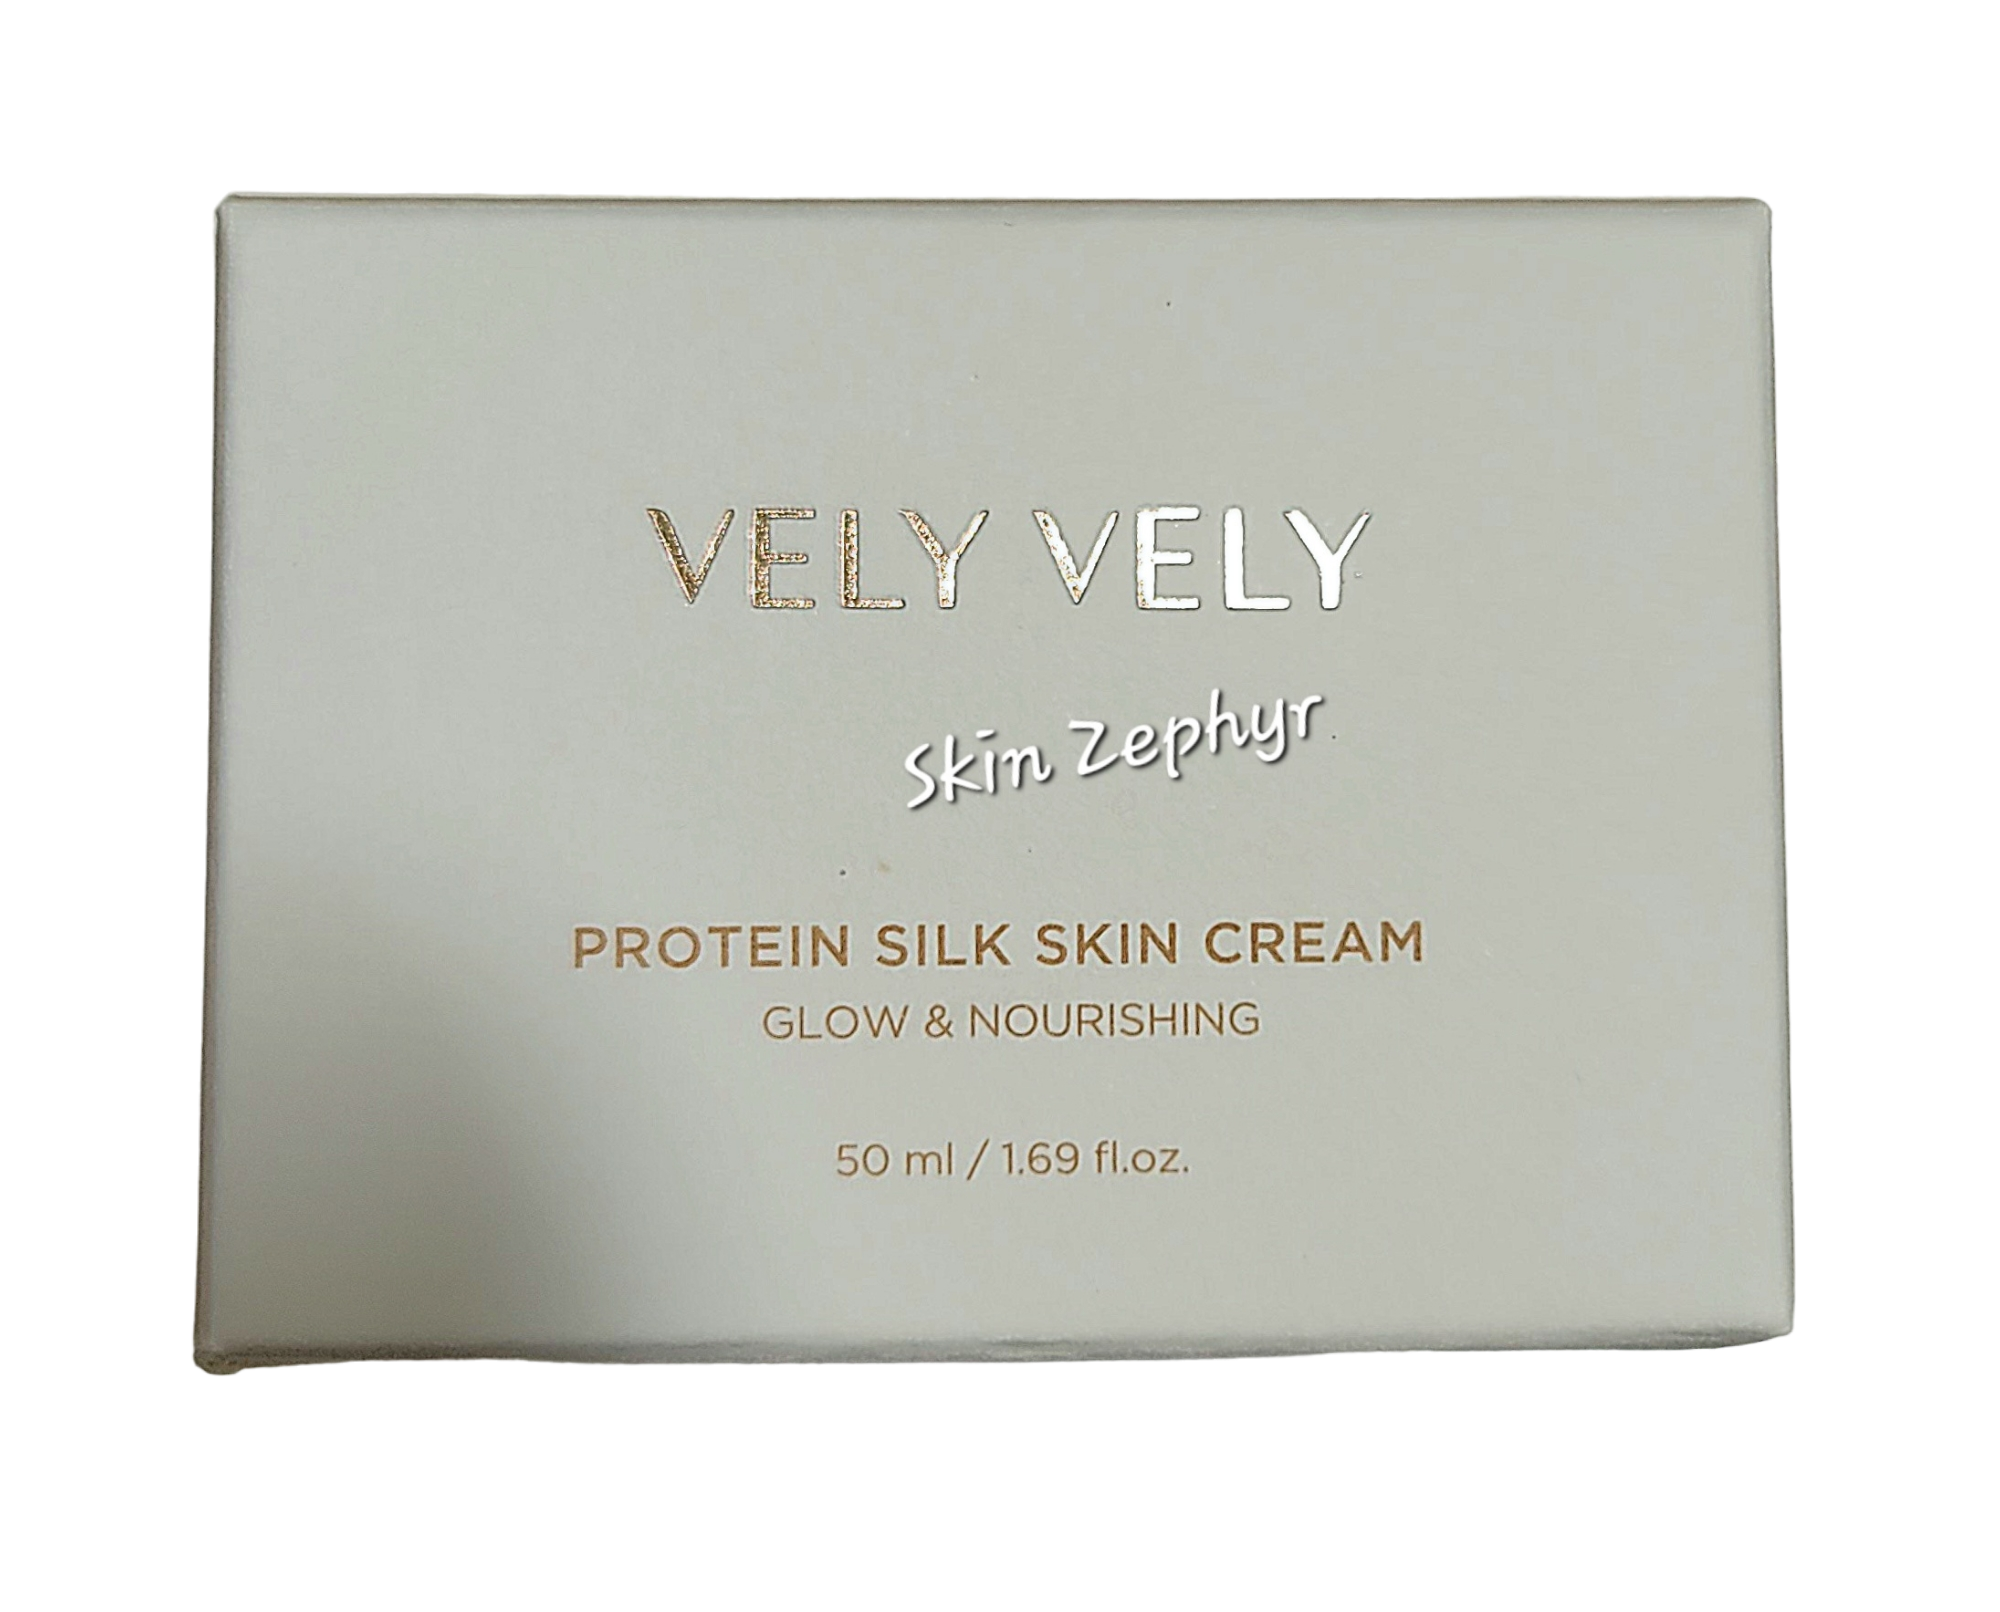 Vely Vely Protein Silk Skin Cream